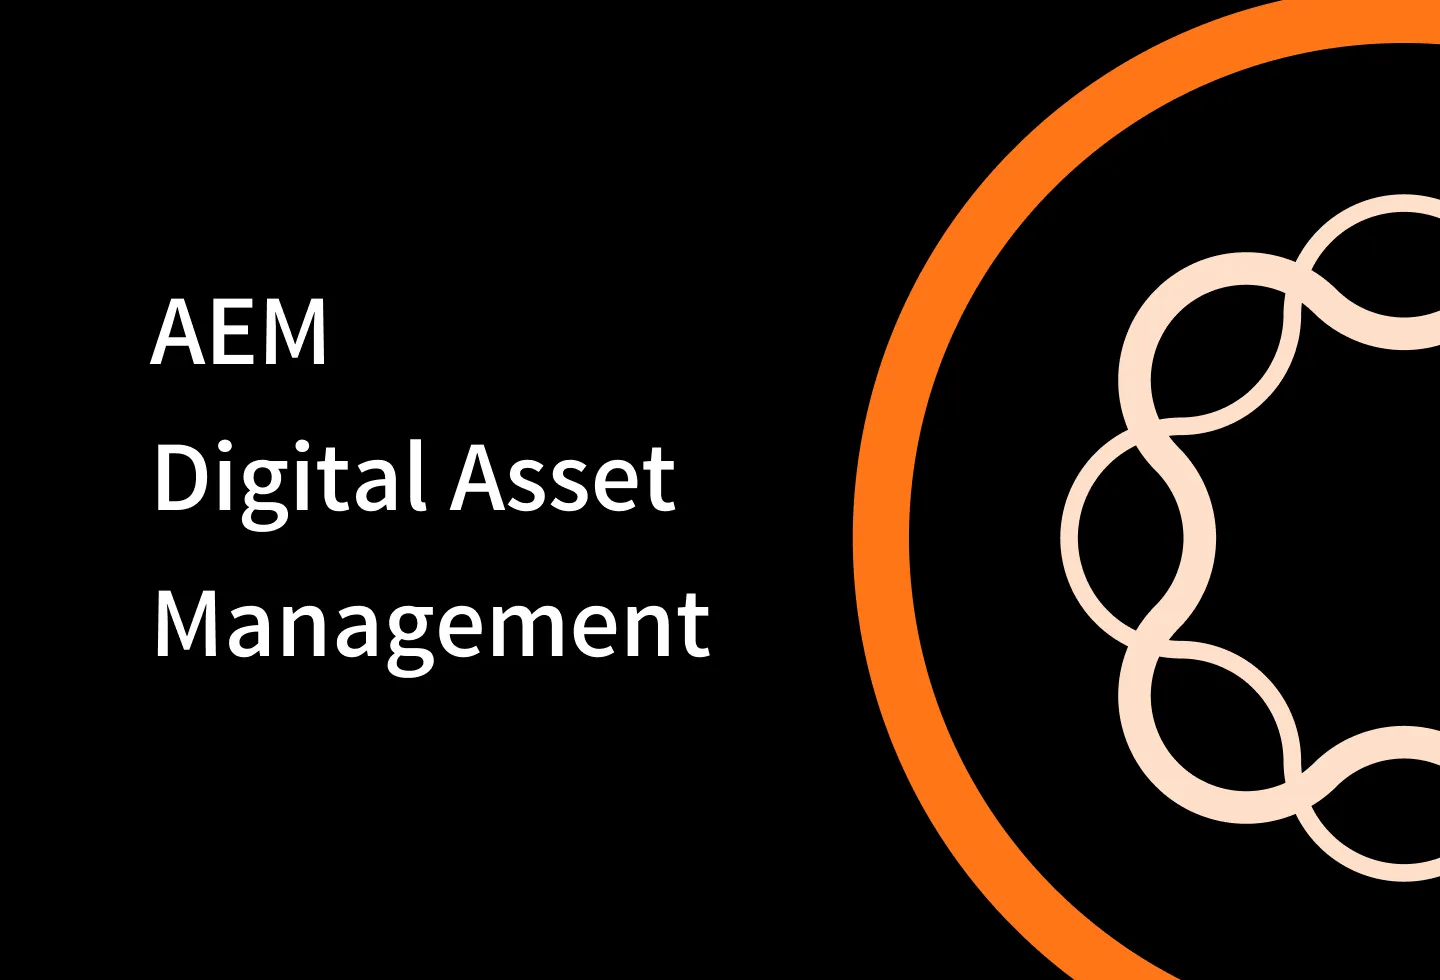 Image: AEM Digital Asset Management